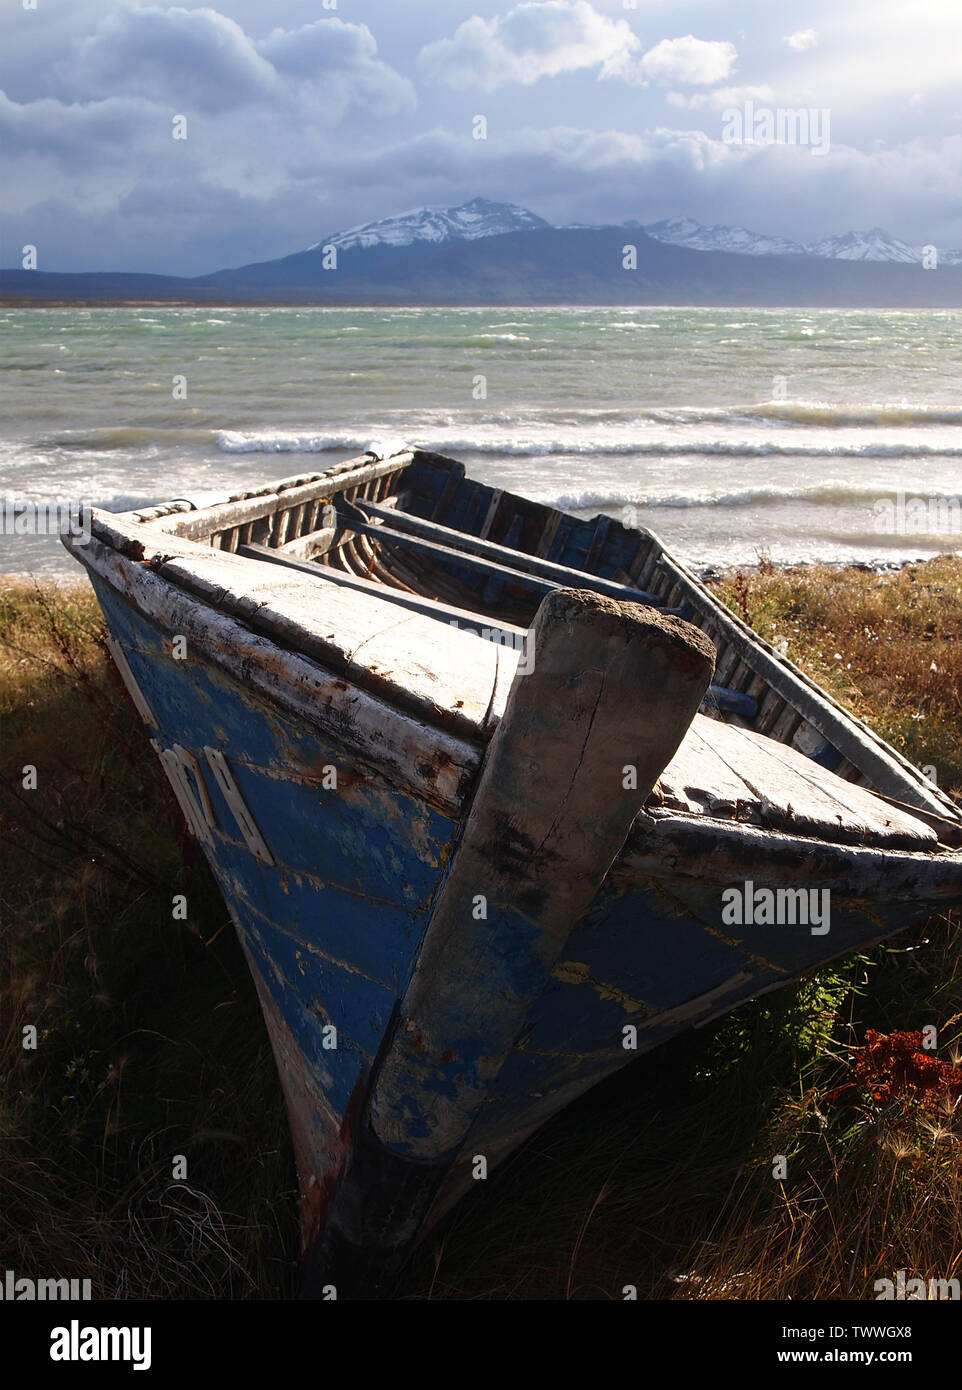 An artisanal fishing boat in Ultima Esperanza Bay, Southern Chile Stock Photo